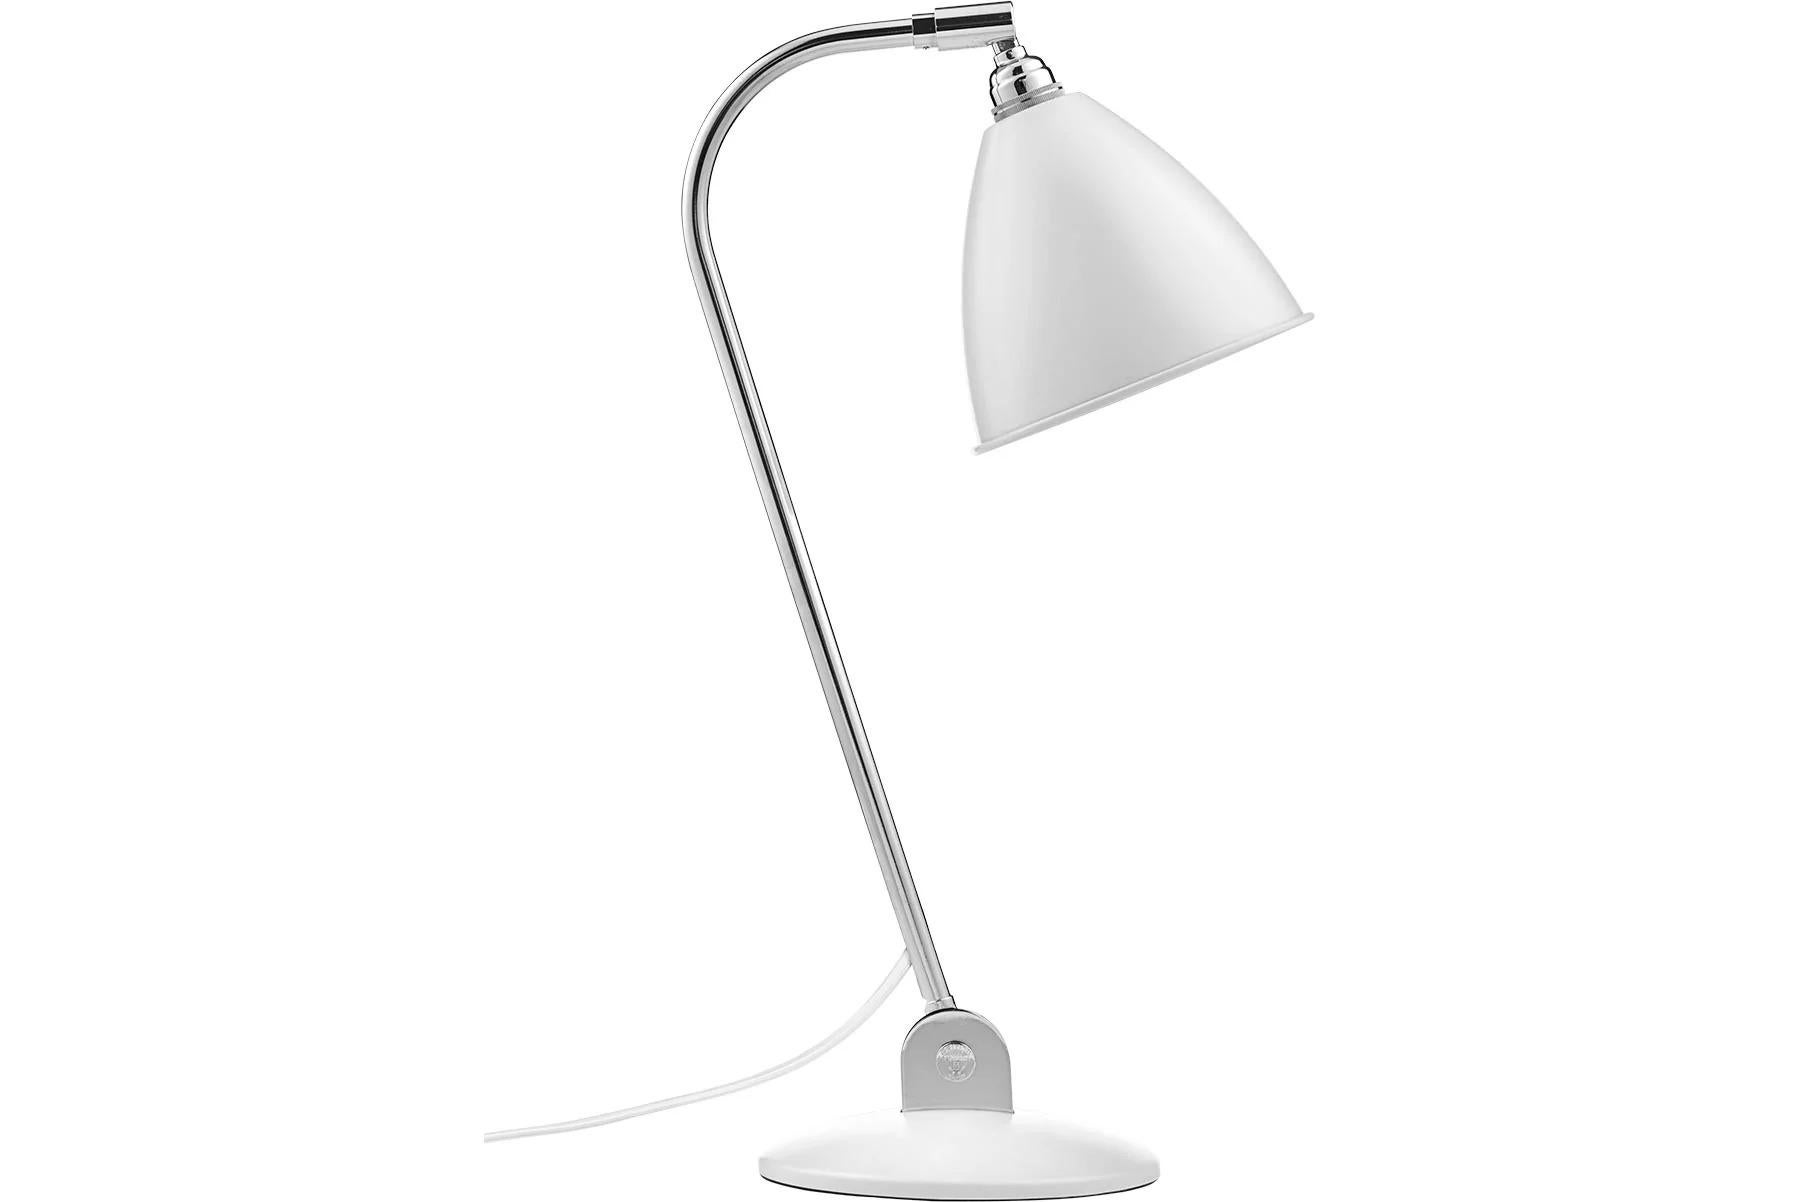 Bauhaus Robert Dudley Bl 2 Table Lamp, Chrome For Sale